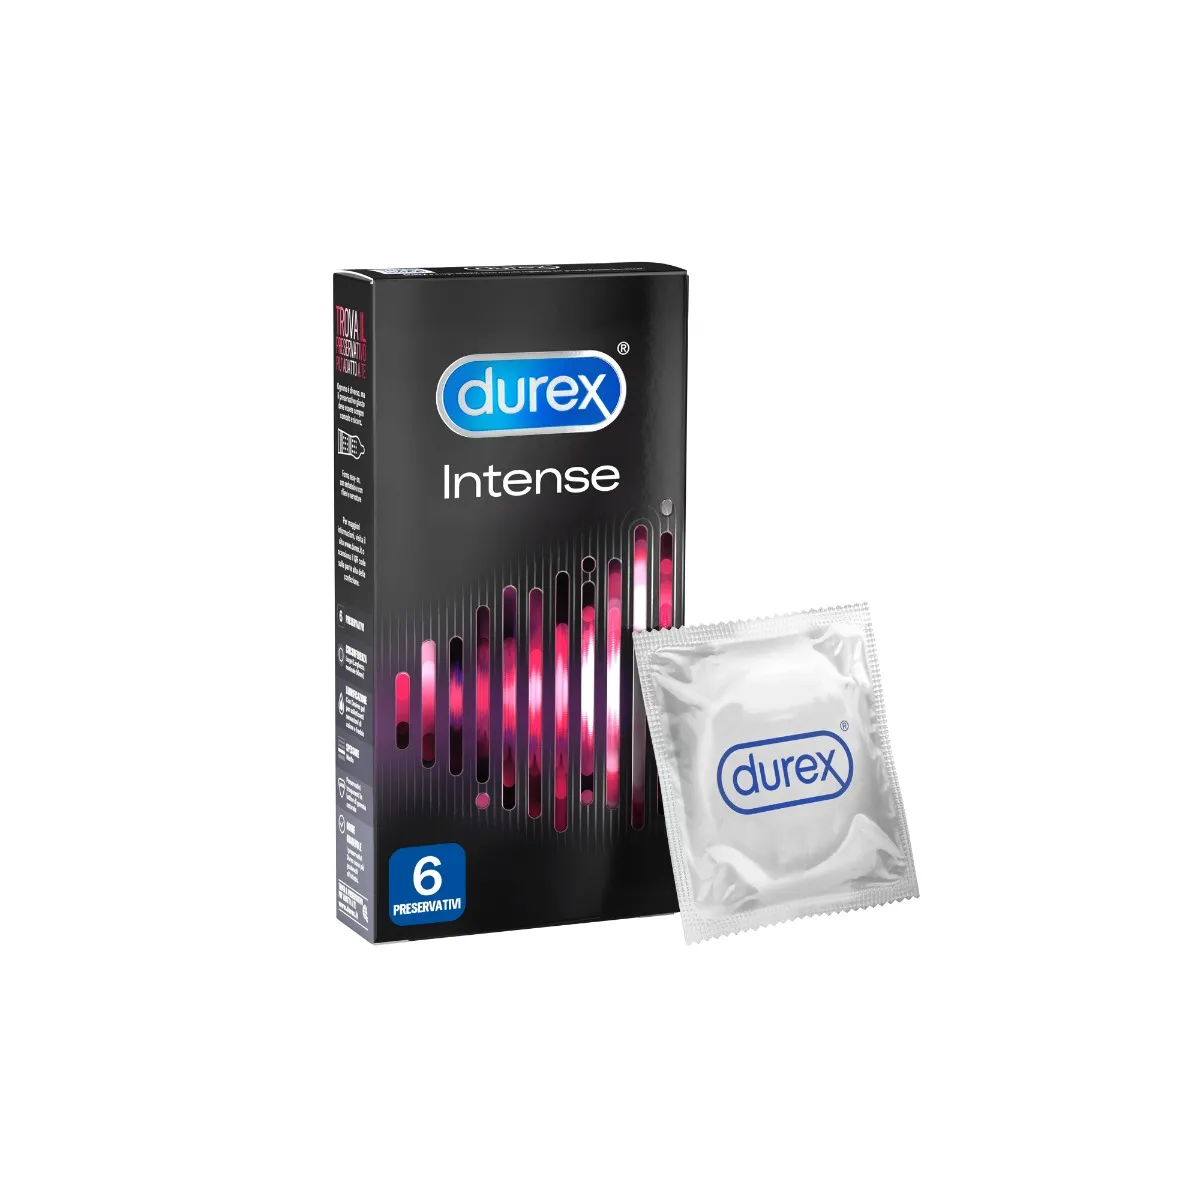 Durex Intense Preservativi 6 Pezzi Con Rilievi e Nervature Stimolanti